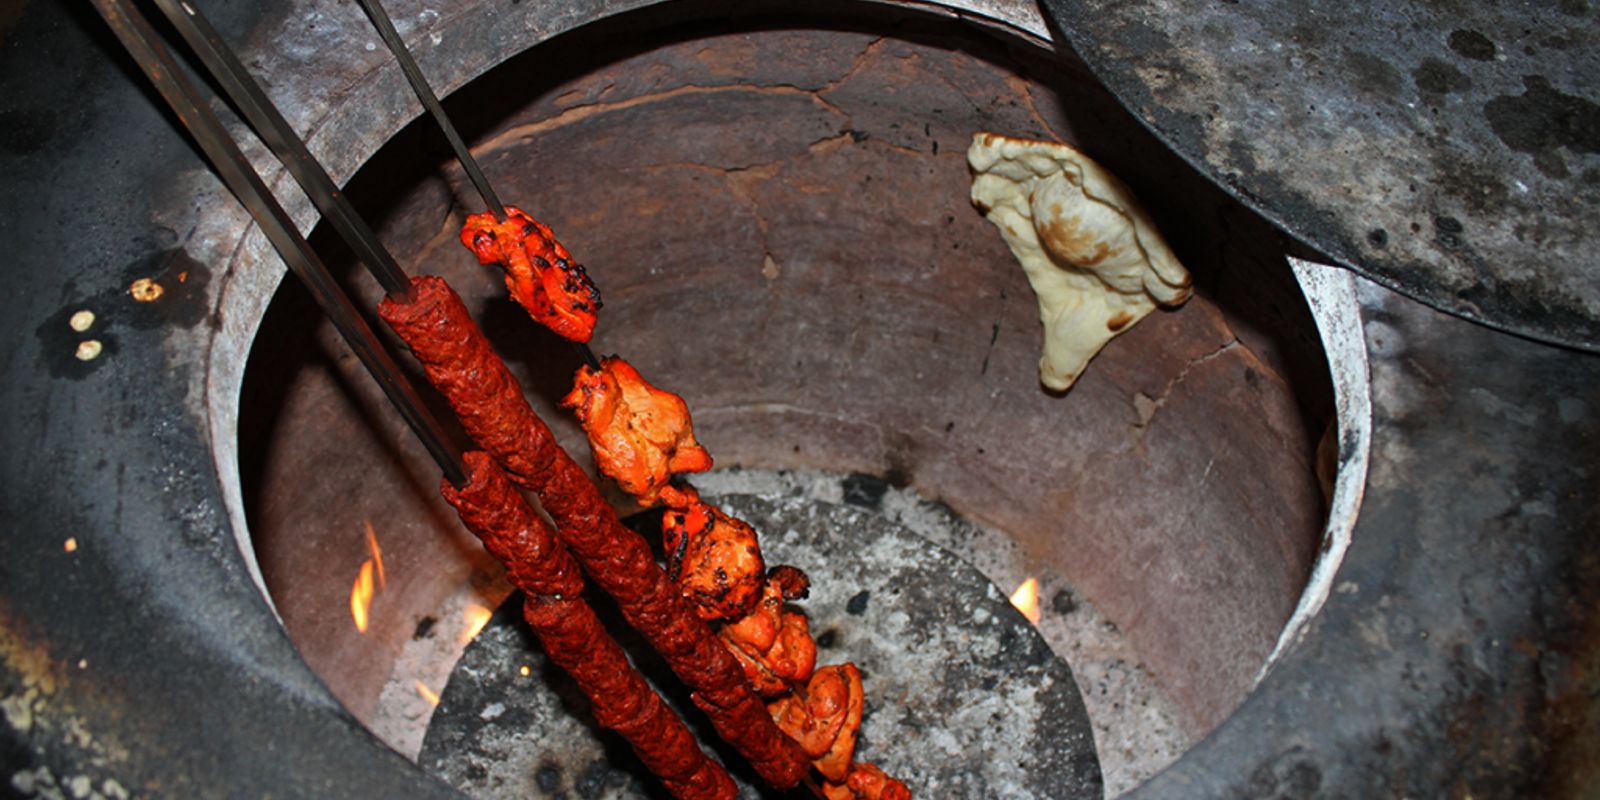 Dal Bukhara Authentic Indian Cuisine